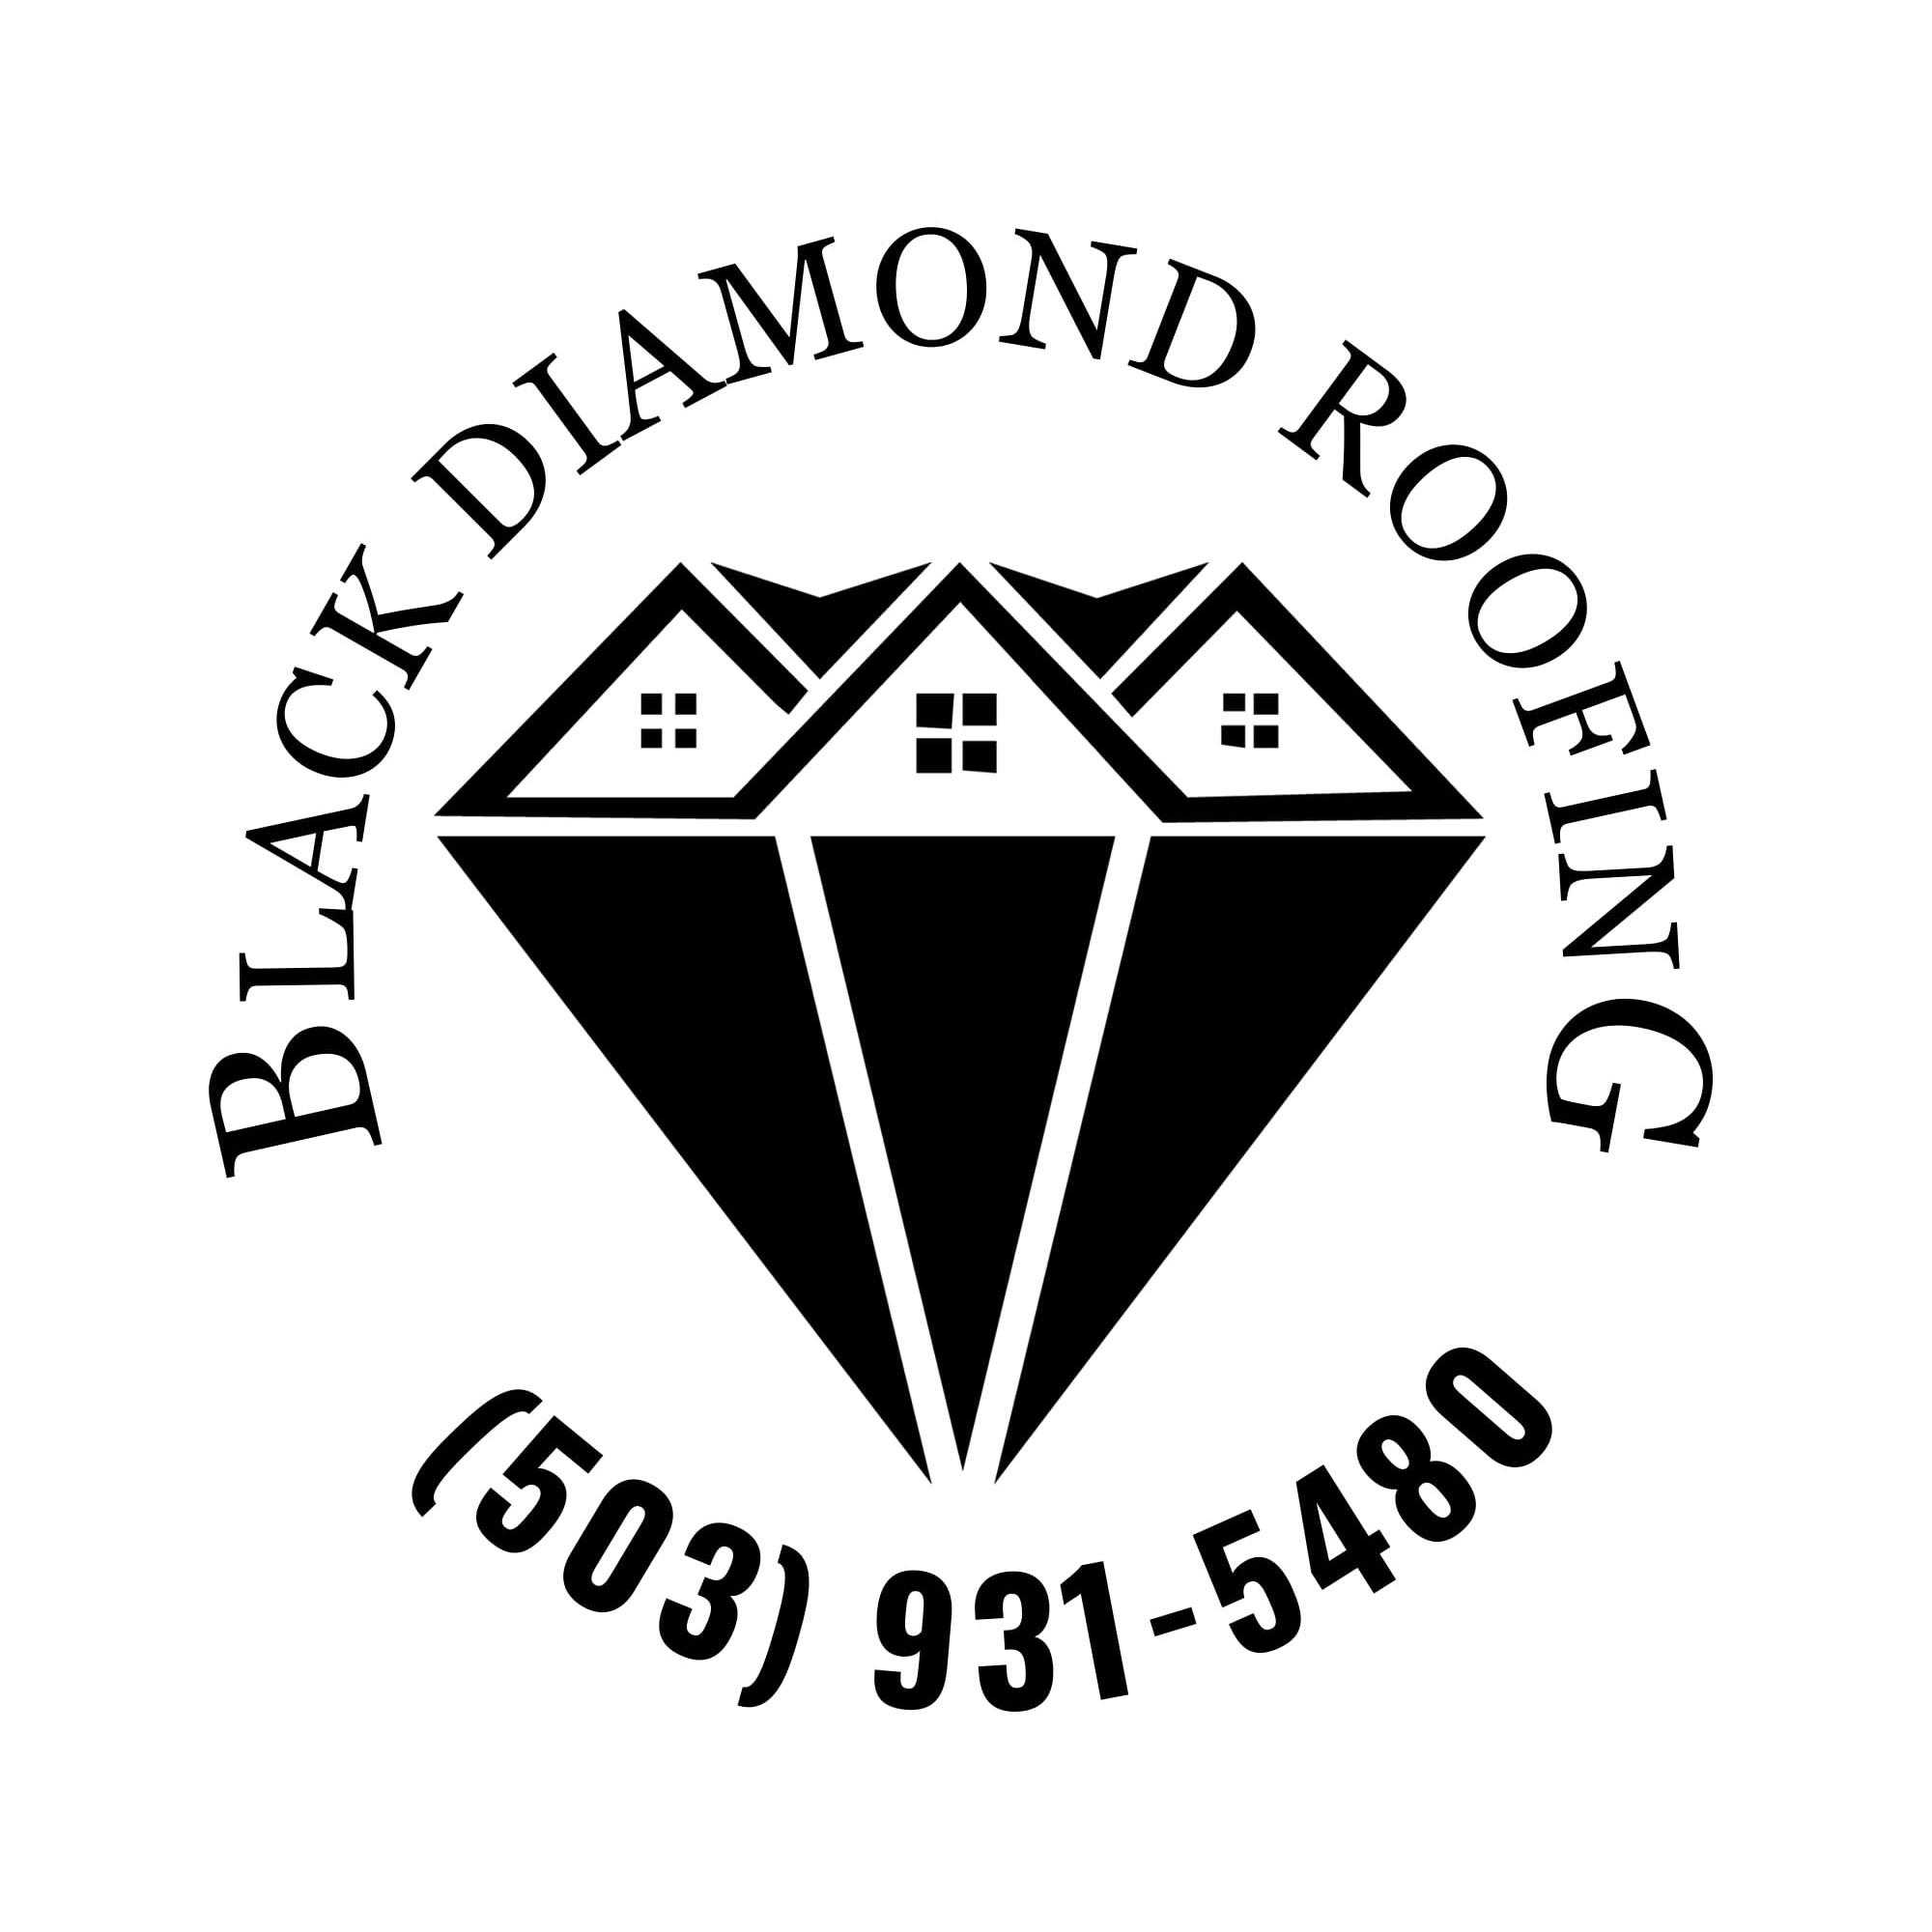 Black Diamond Roofing - Salem, OR - (503)931-5480 | ShowMeLocal.com